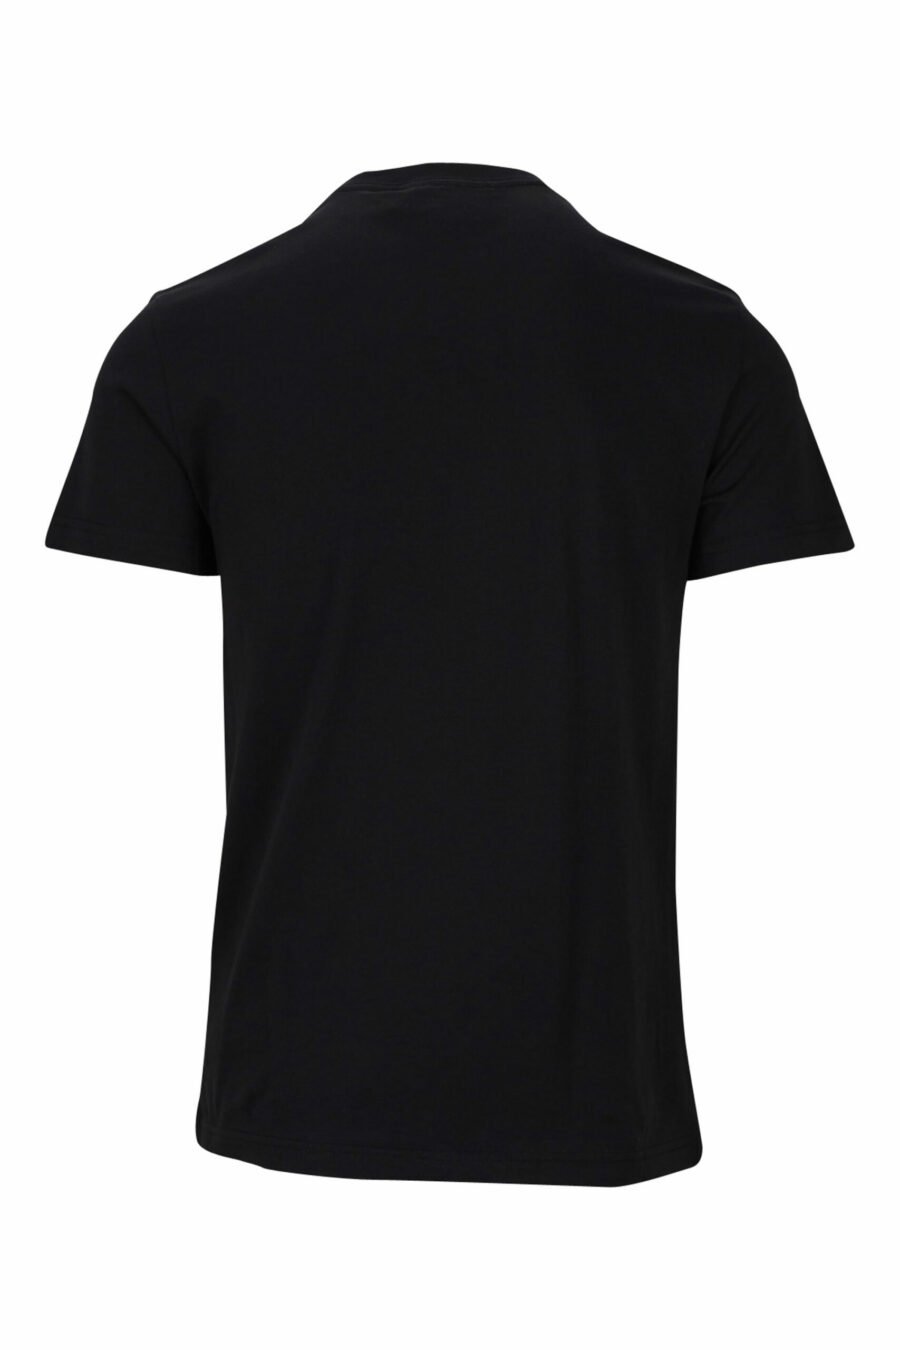 Schwarzes T-Shirt mit kreisförmigem Mini-Logo in Gold - 8052019468465 1 skaliert